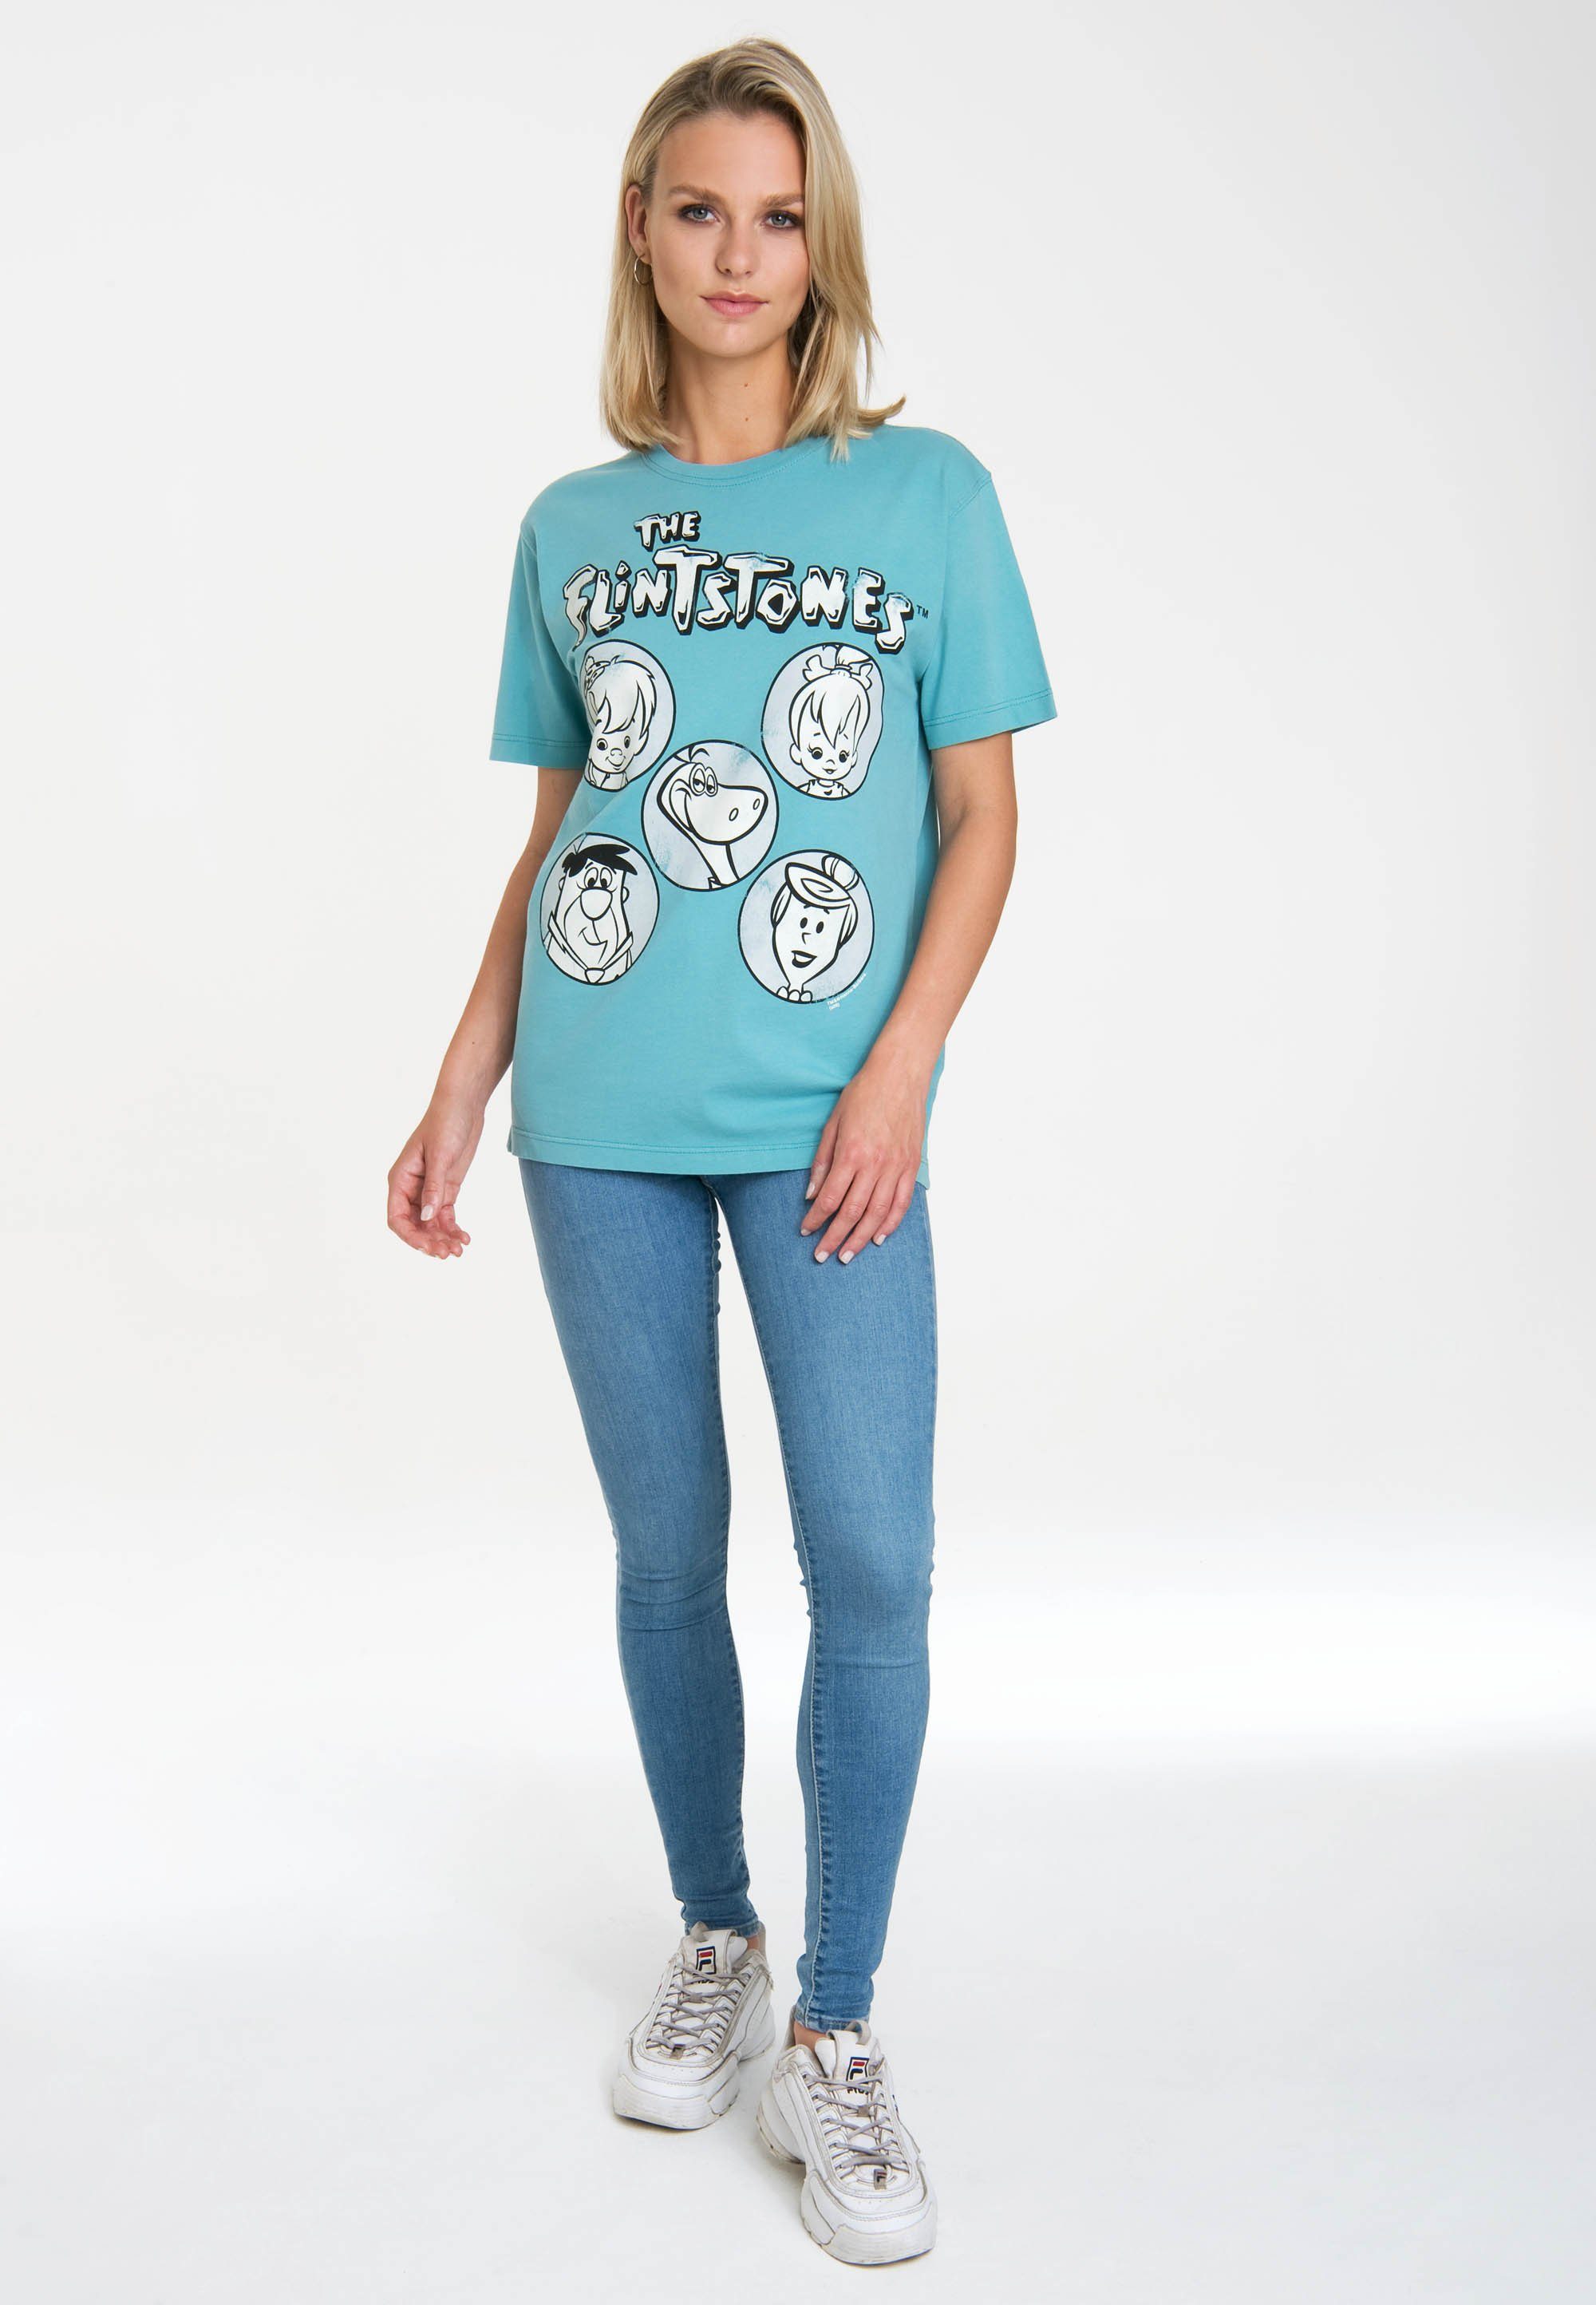 Flintstones LOGOSHIRT T-Shirt The Originaldesign lizenziertem mit